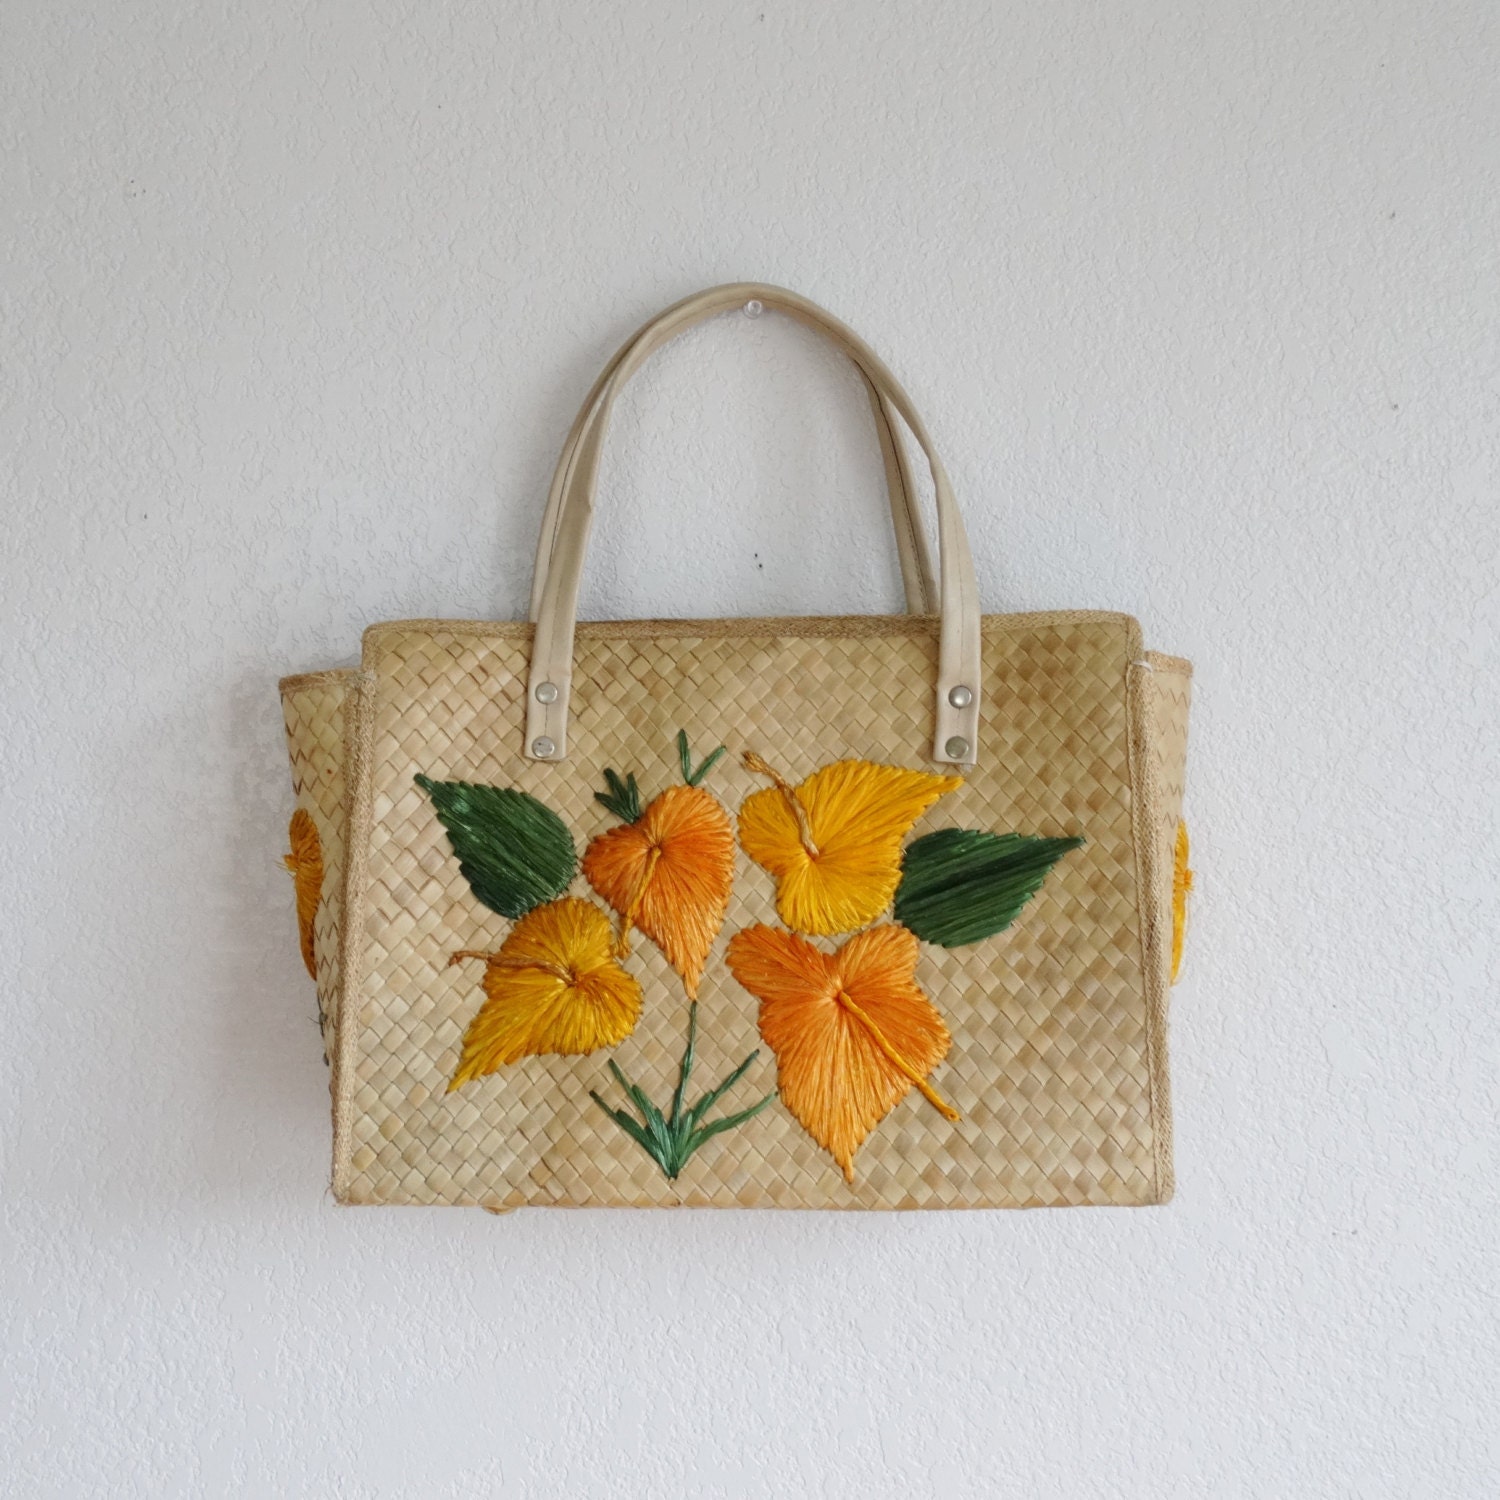 vintage embroidered straw purse wicker basket by FoundbyMeVintage